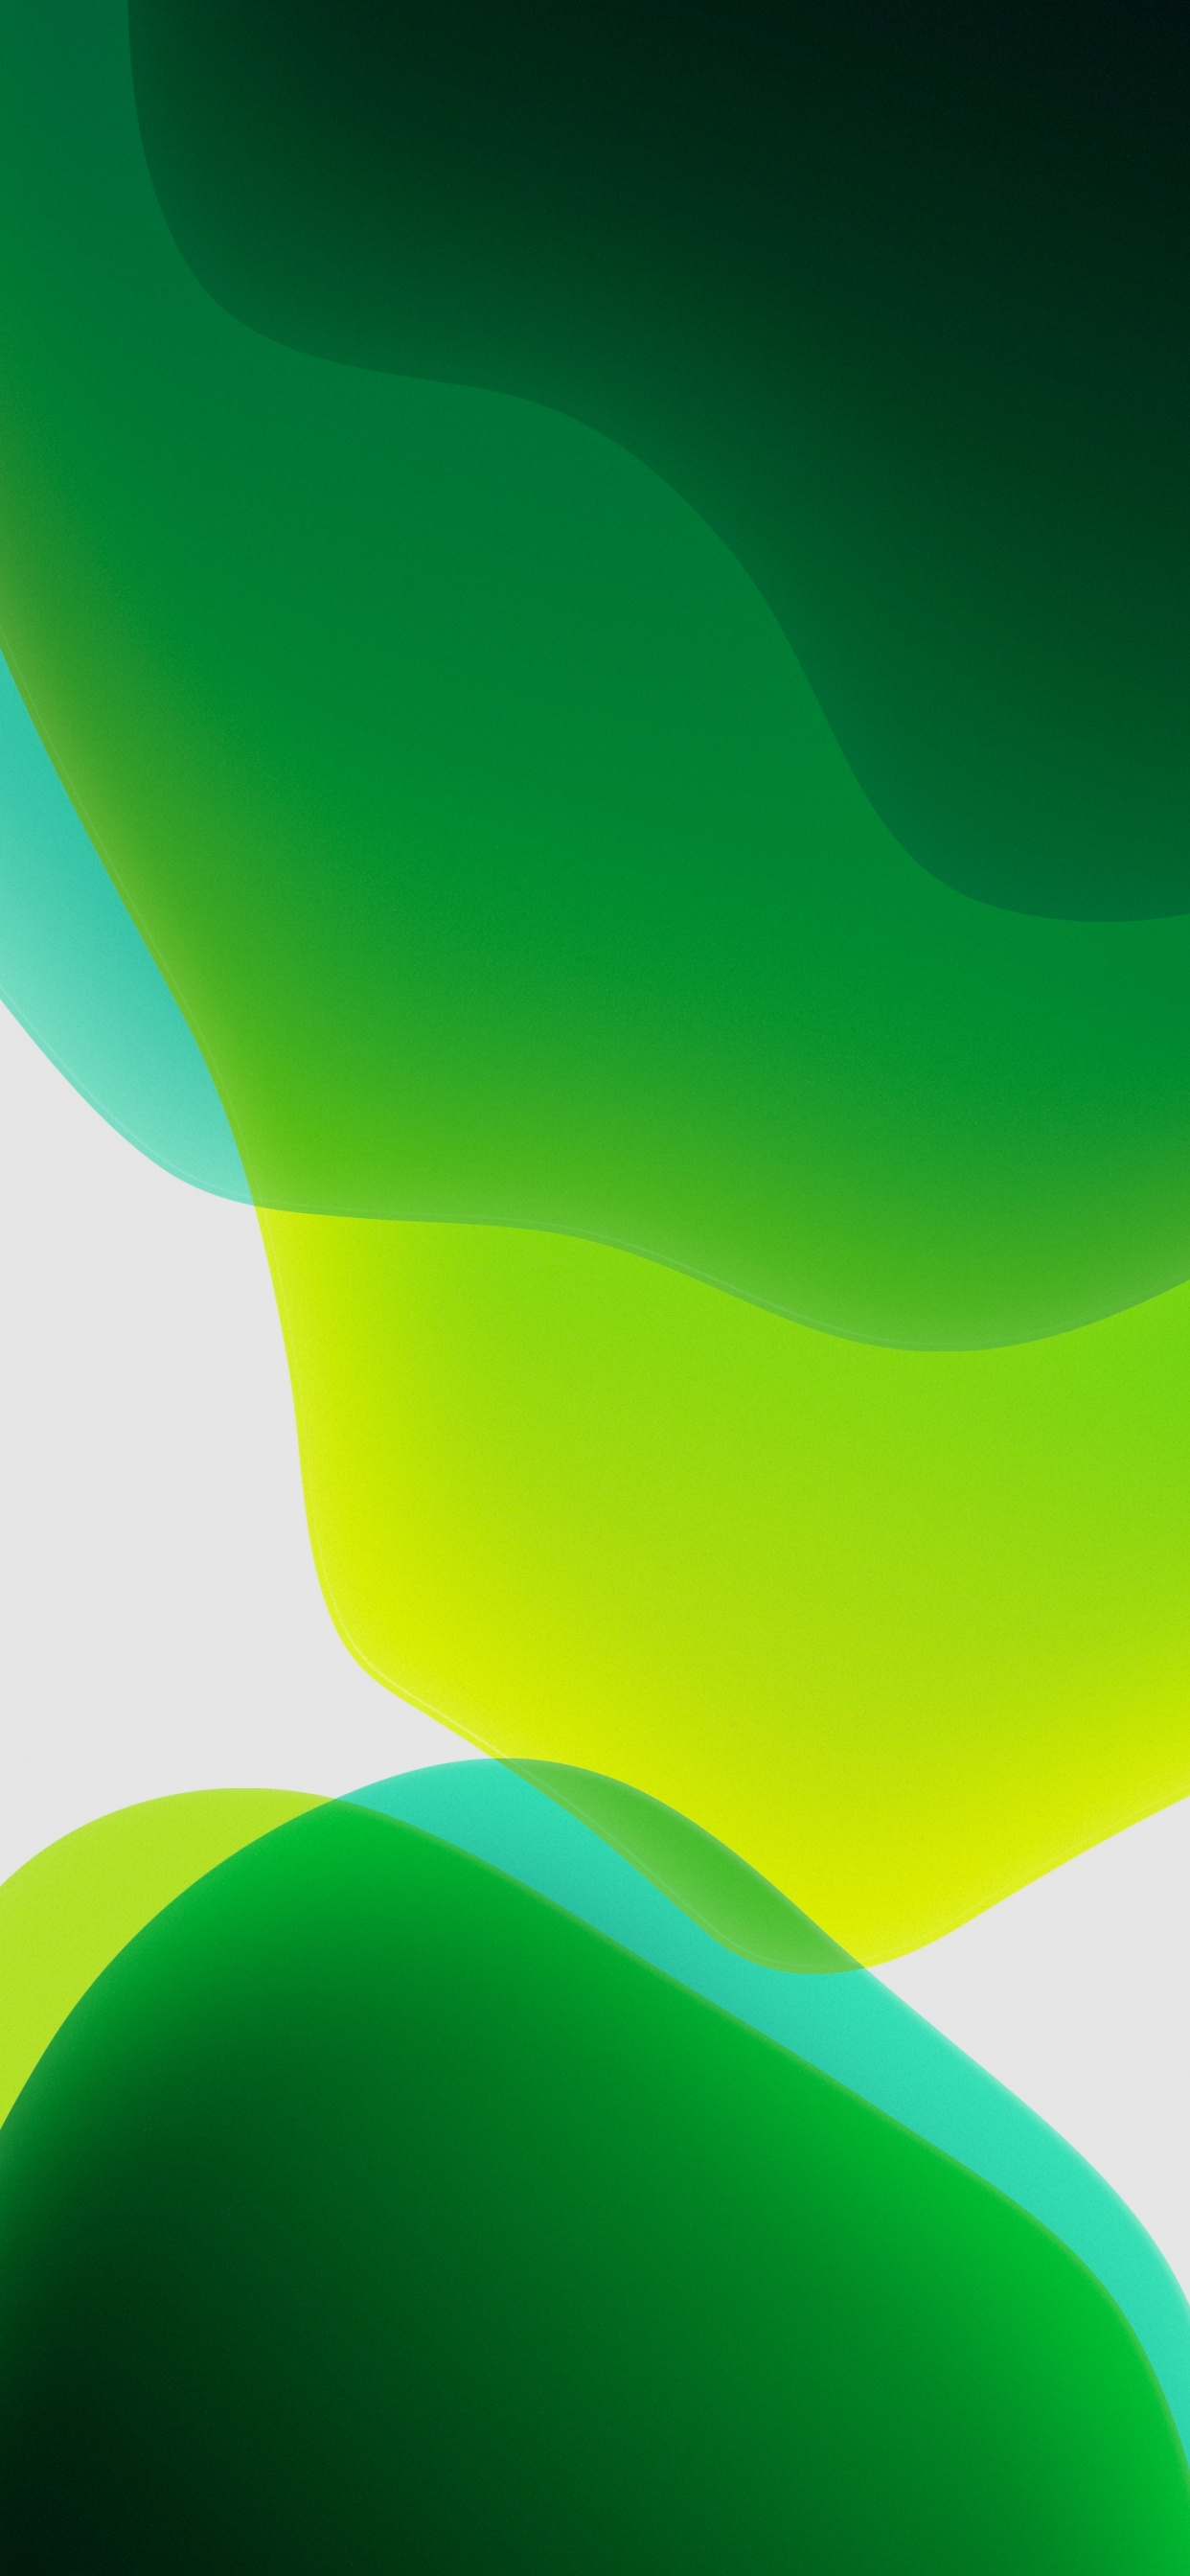 iPadOS Wallpaper 4K, Green, Stock, White background